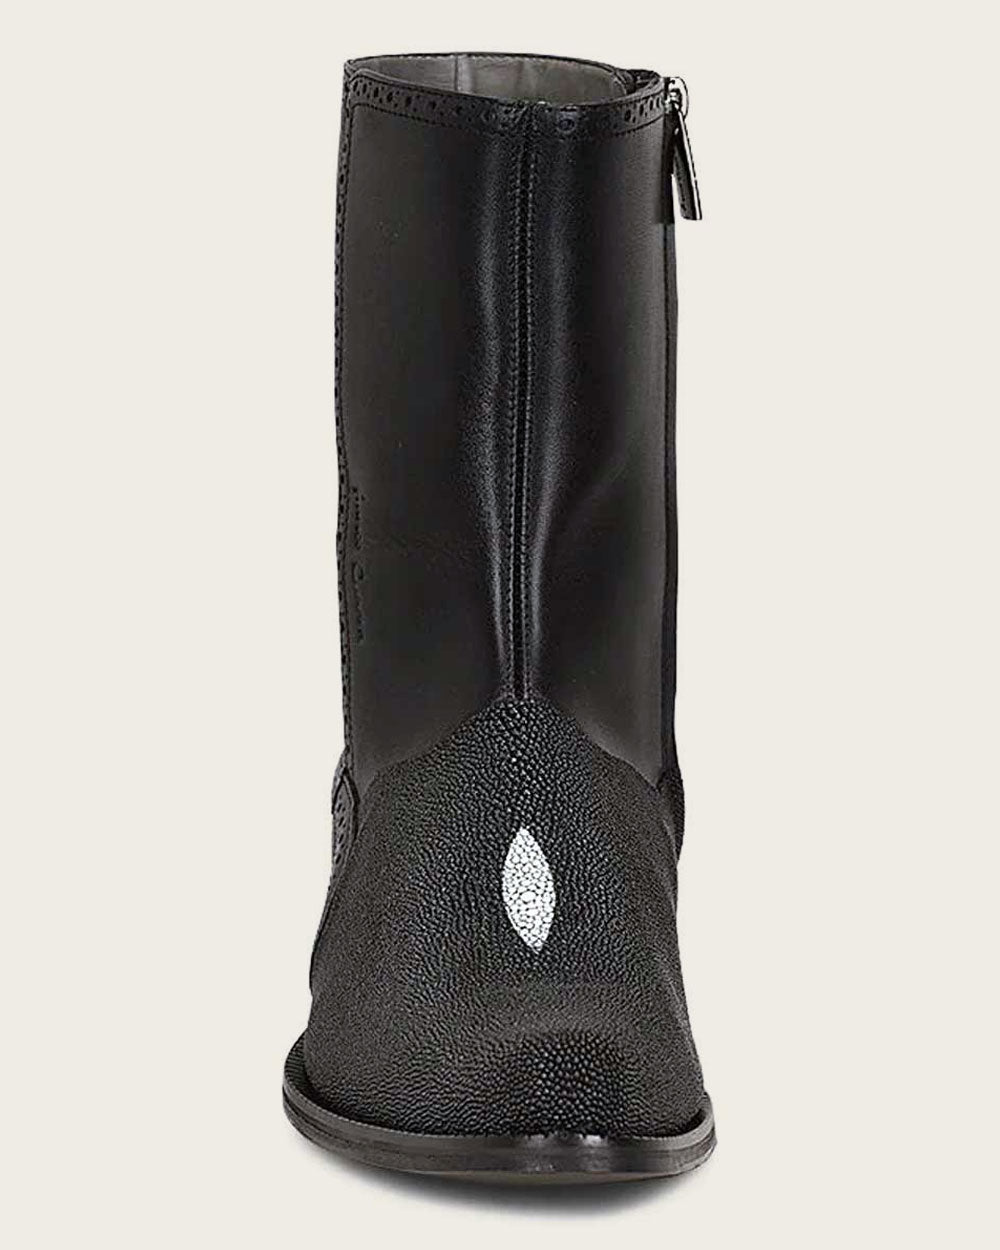 Cuadra: Comfort & elegance meet sophistication in black stingray boots.